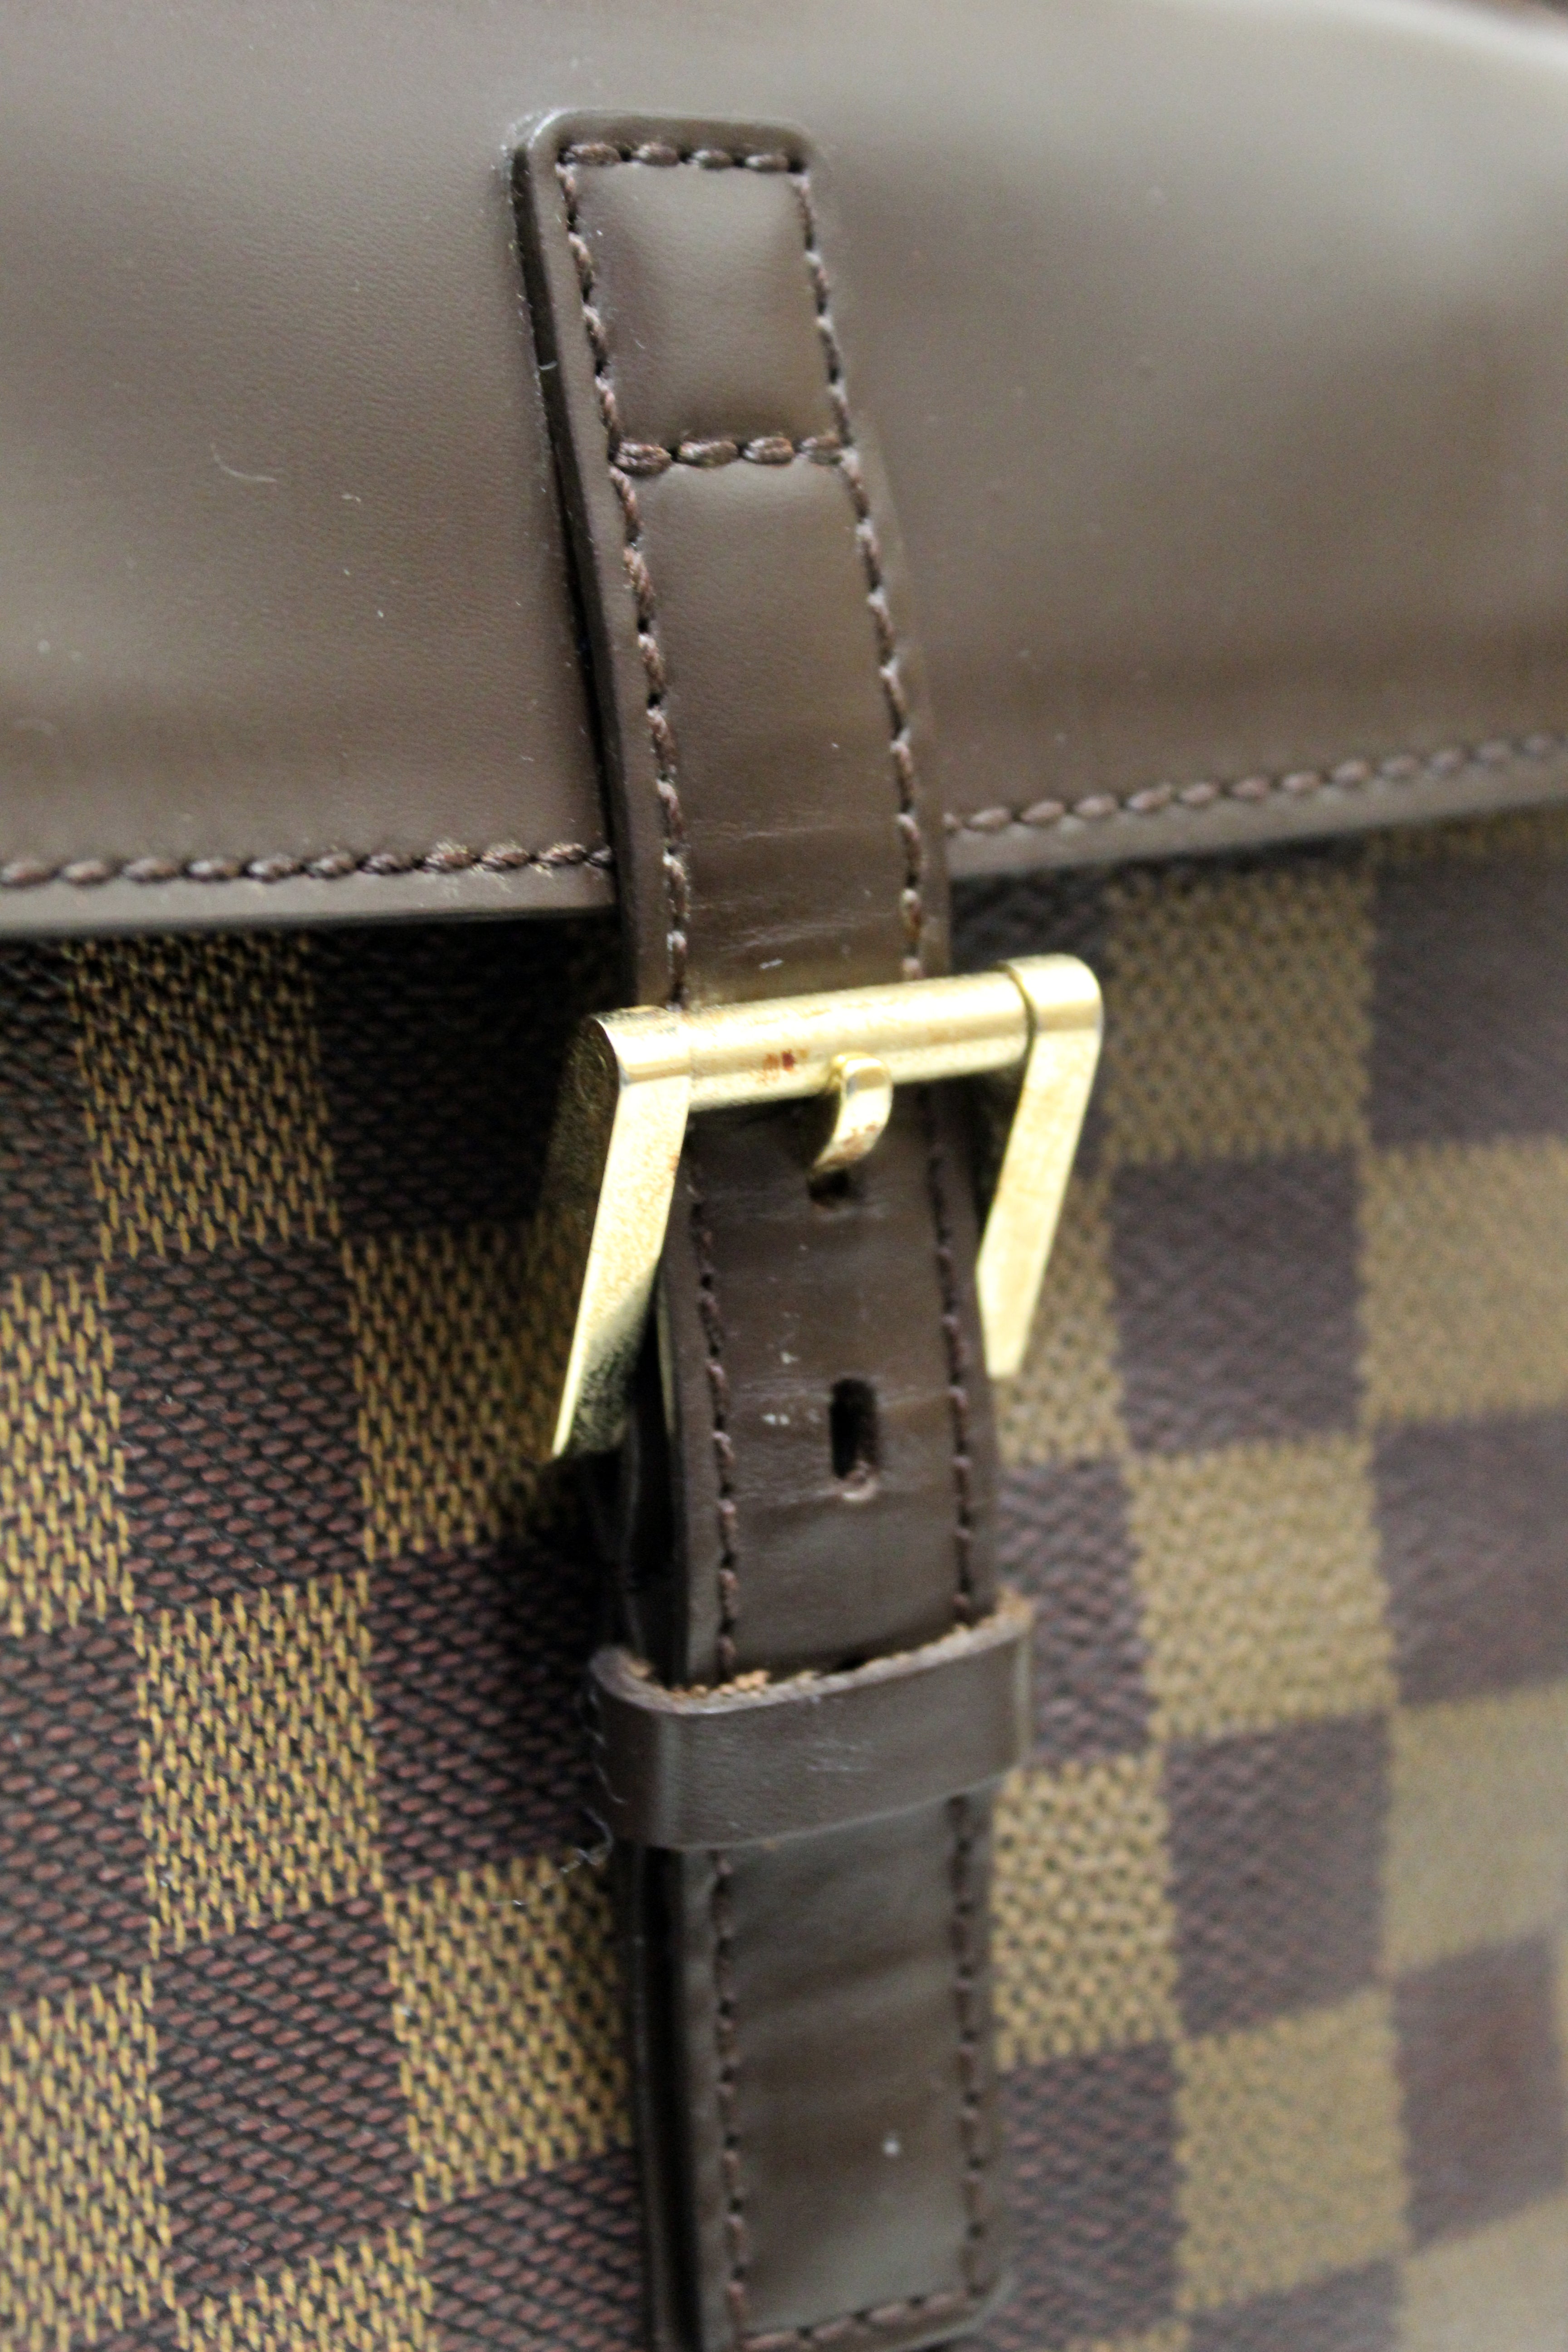 🐻 Vintage Louis Vuitton Damier Shoulder Bag 🐻 Worldwide Shipping